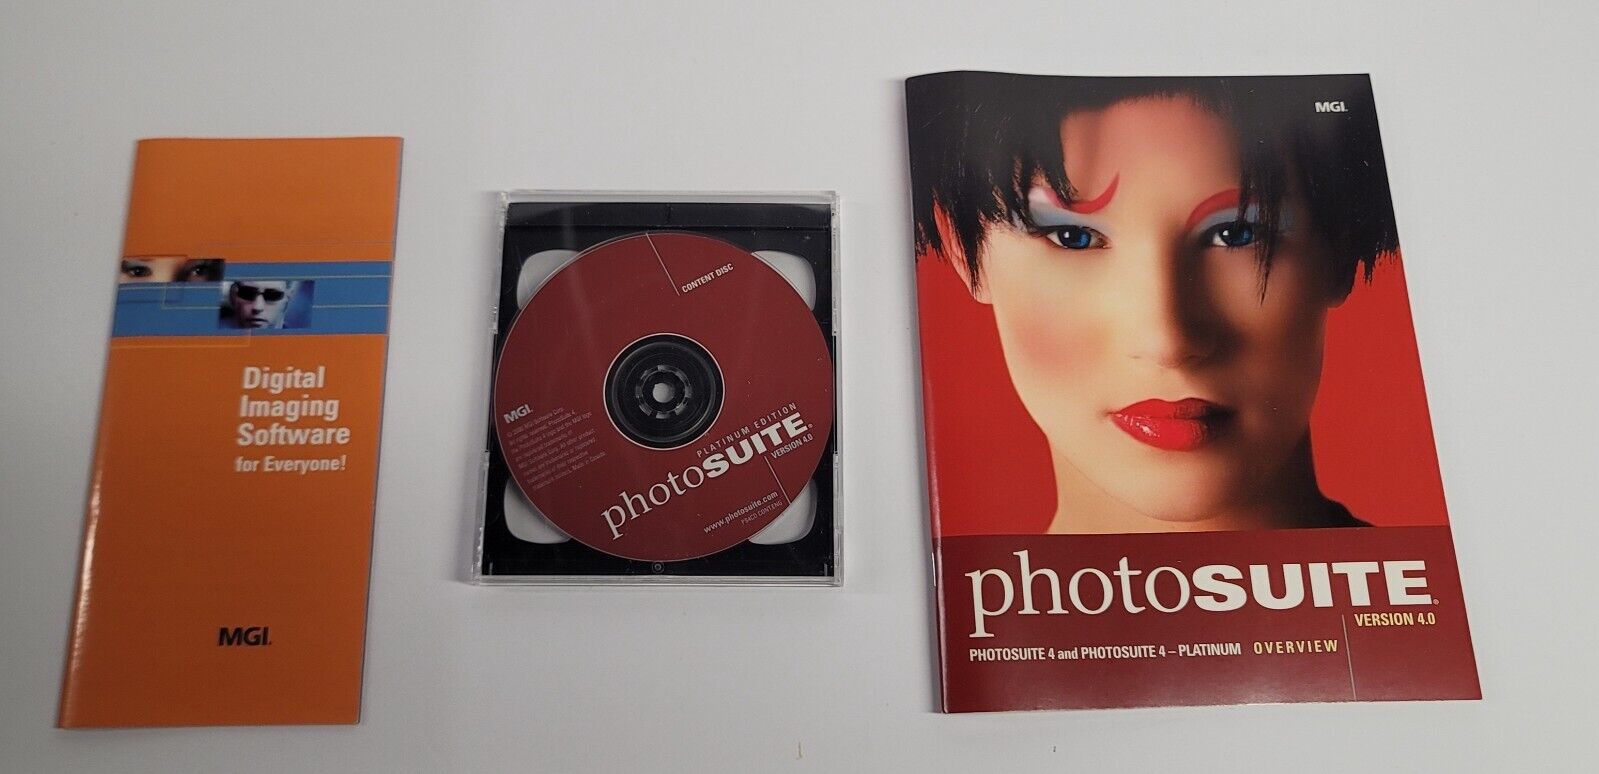 MGI PhotoSuite 4.0 Platinum Edition Web & PC Photography Made Easy